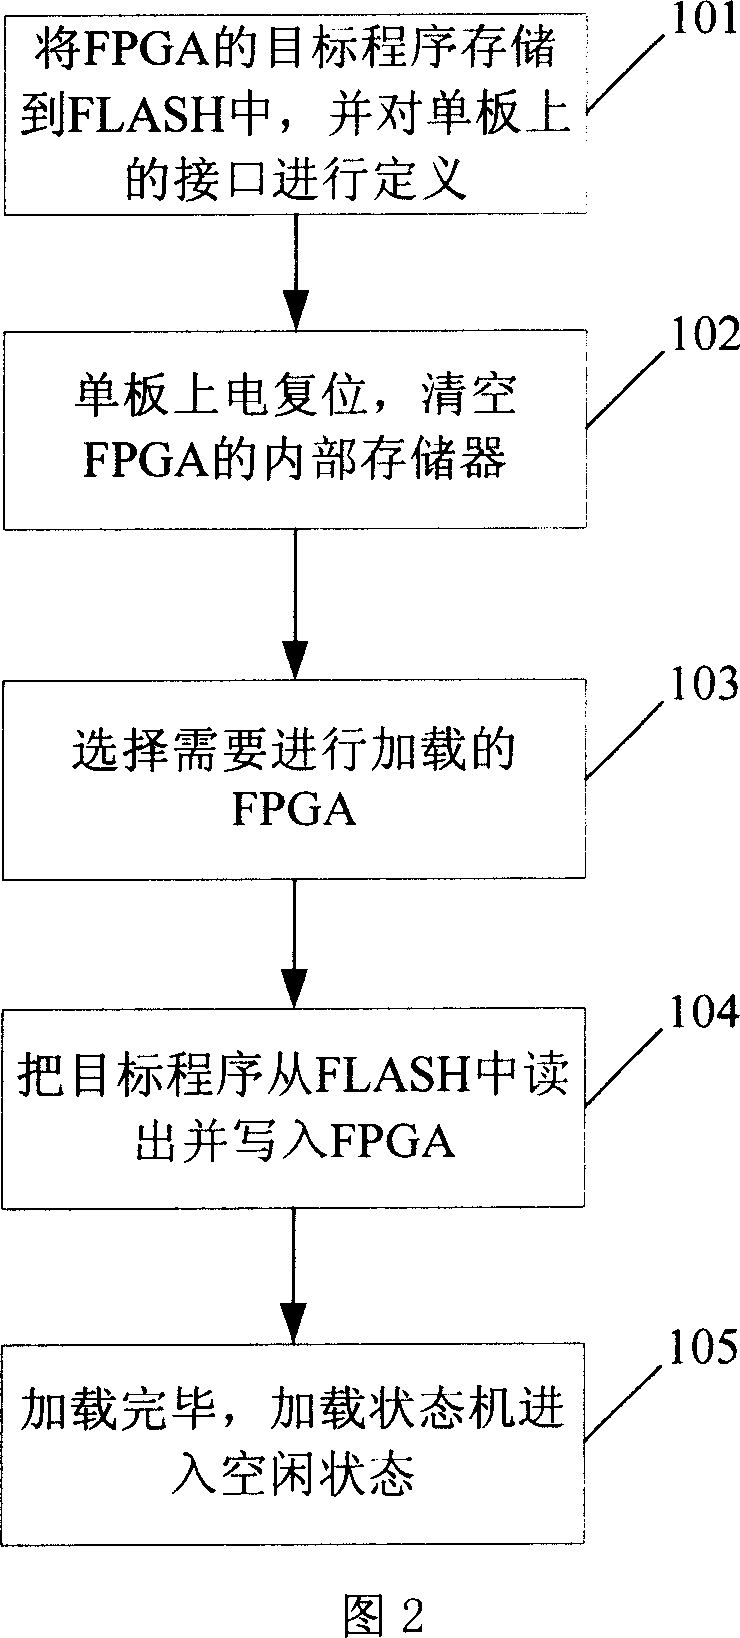 Method and system for loading FPGA target program